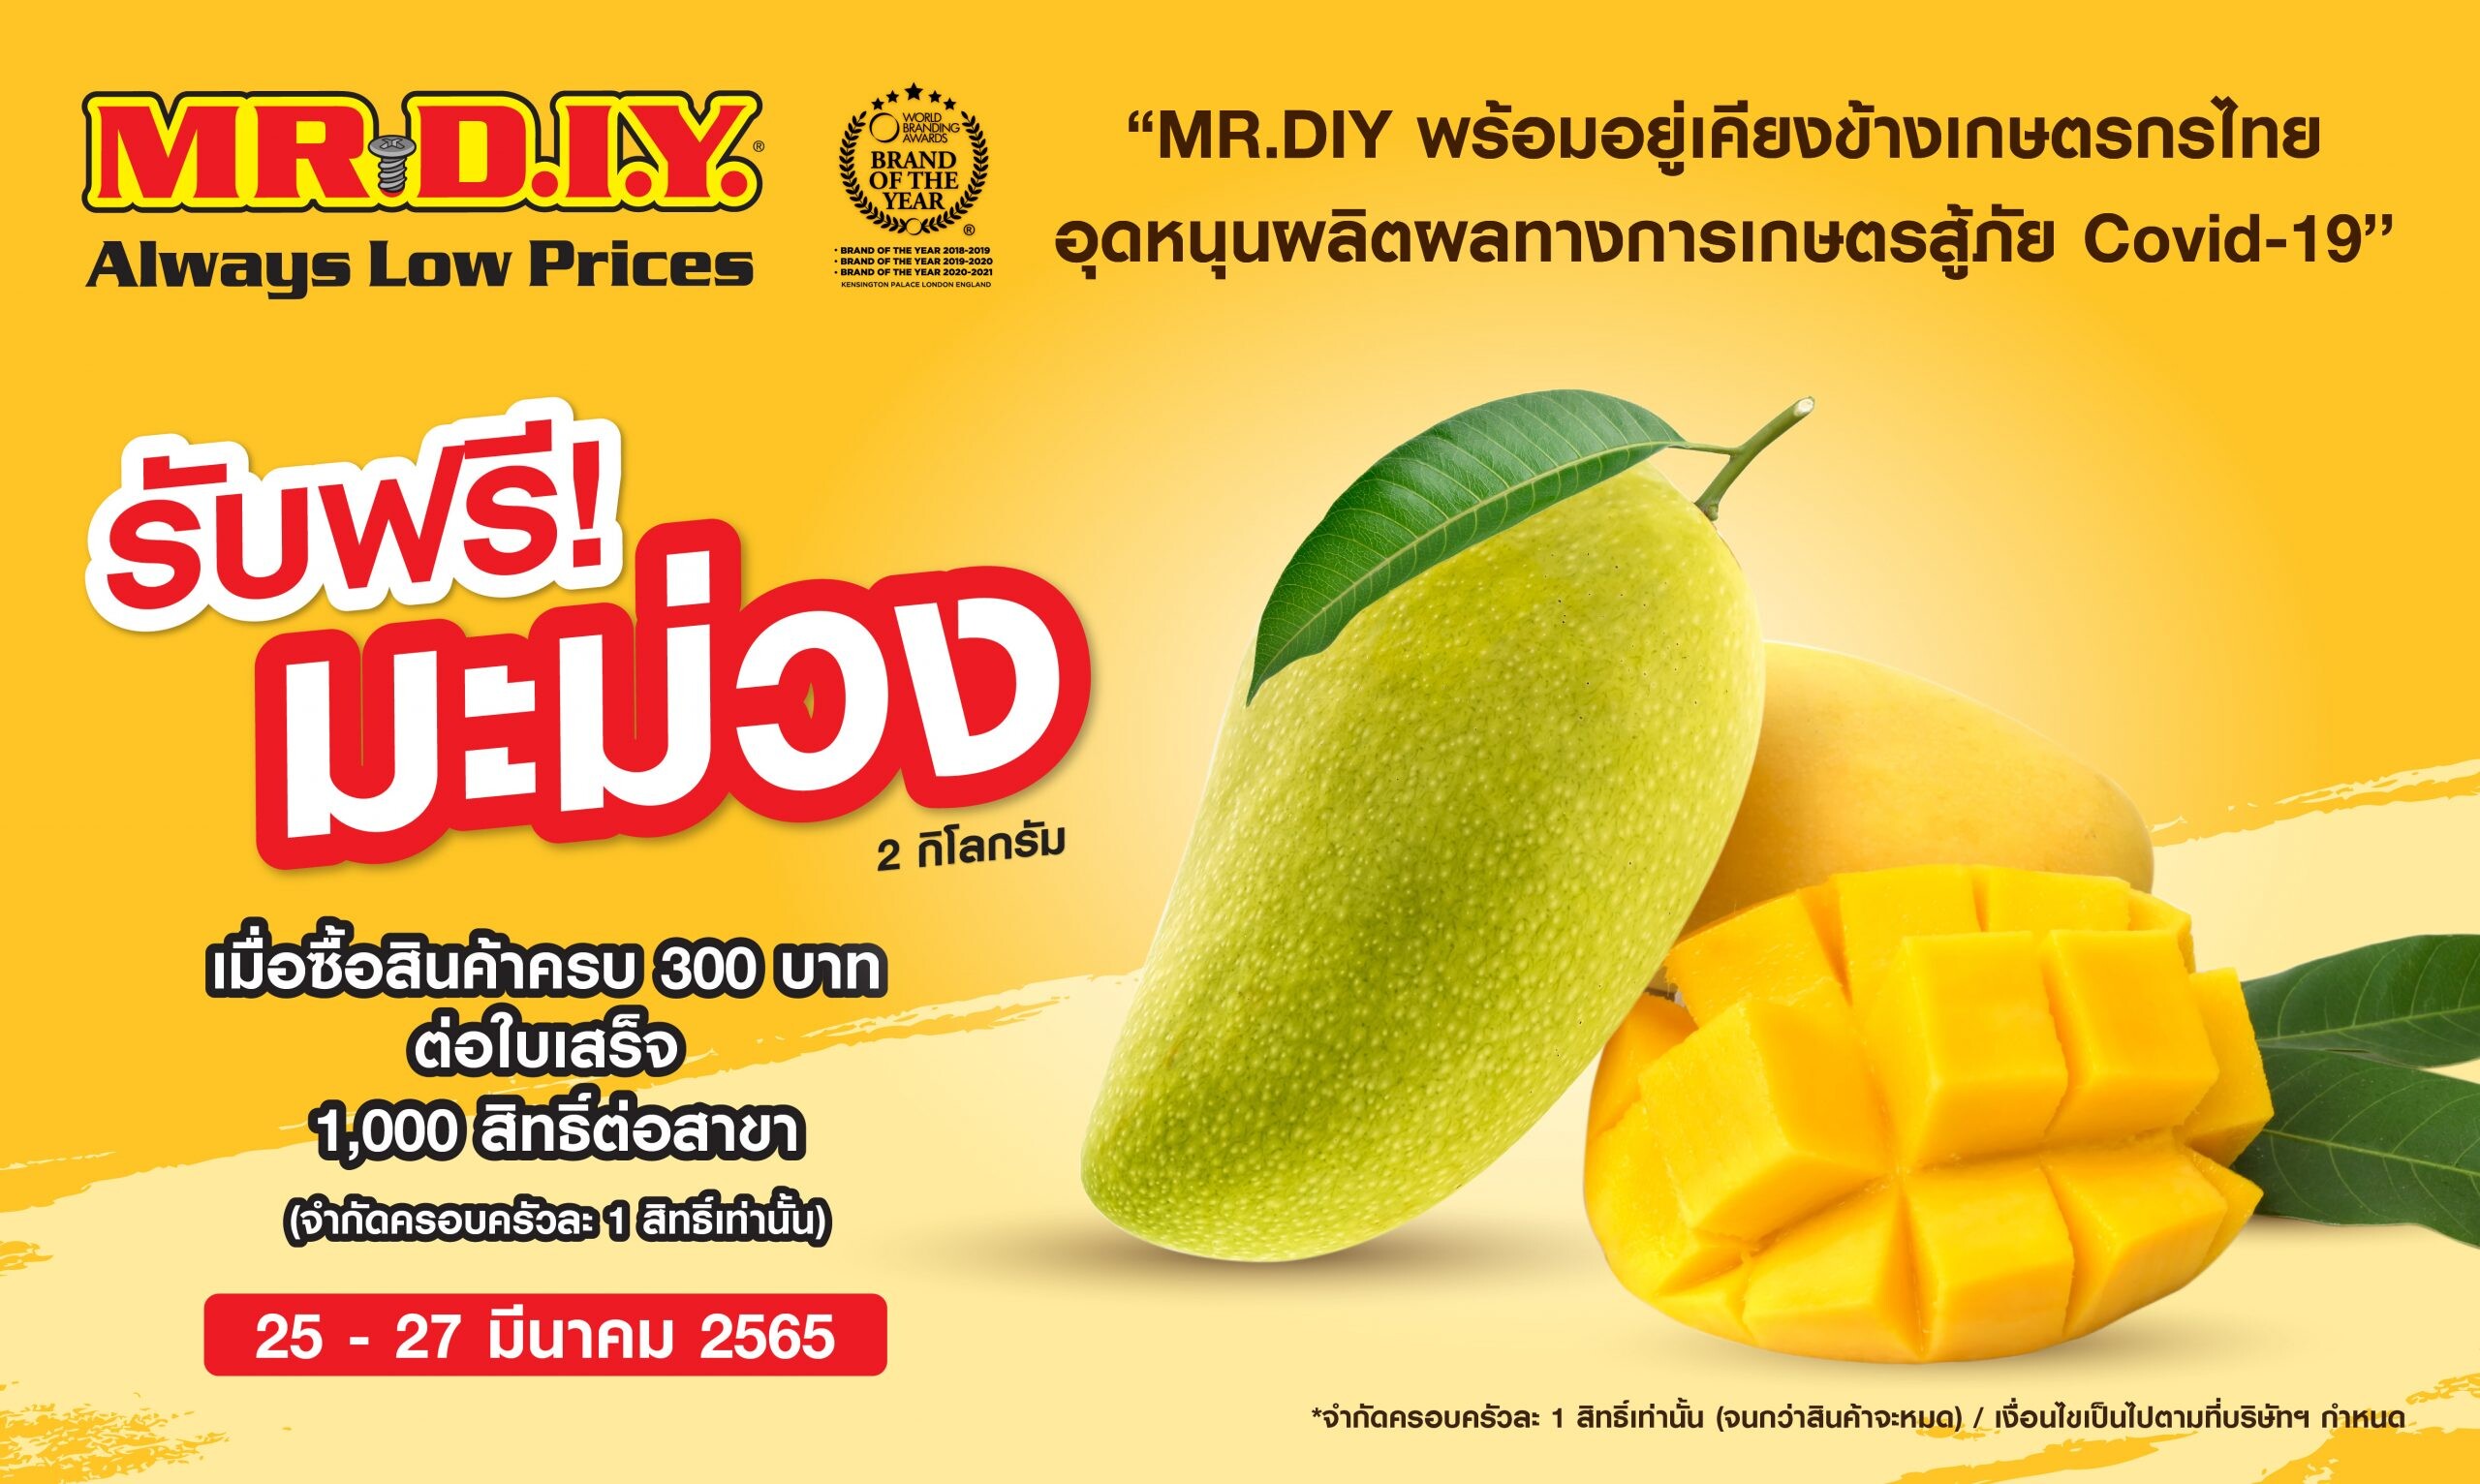 MR.DIY Mango Days ช่วยเหลือเกษตรกรไทย อุดหนุนผลิตผลทางการเกษตร เพื่อส่งมอบให้ลูกค้าในงานฉลองเปิดสาขาใหม่ มี.ค. - เม.ย. นี้